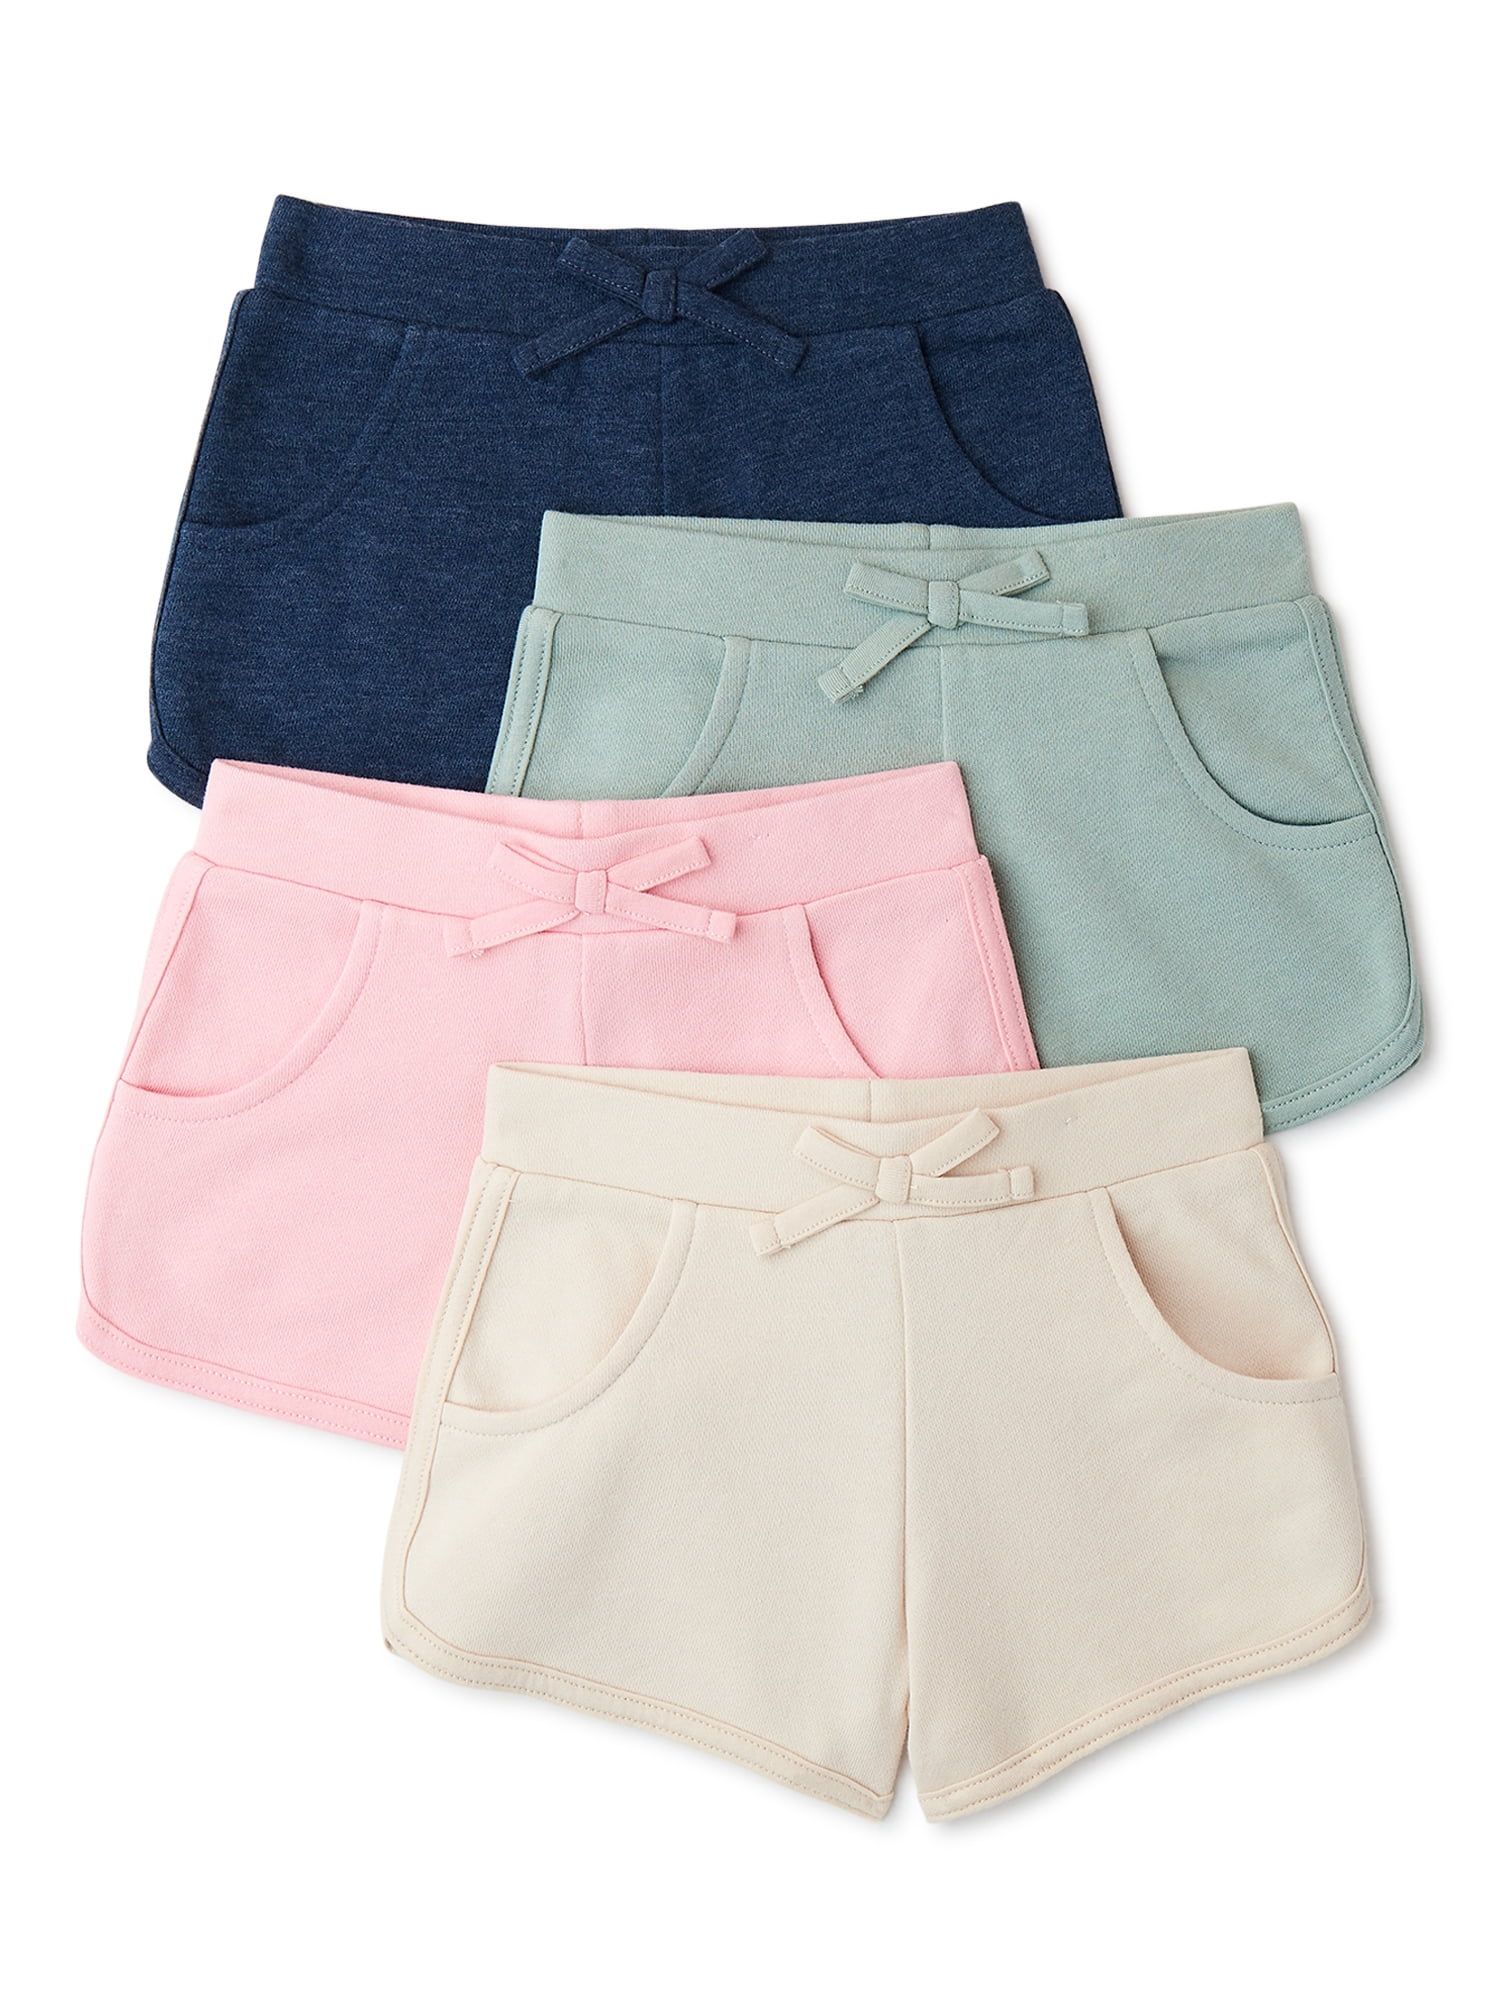 Garanimals Baby and Toddler Girls' Dolphin Shorts, 4-Pack, Sizes 12M-5T | Walmart (US)